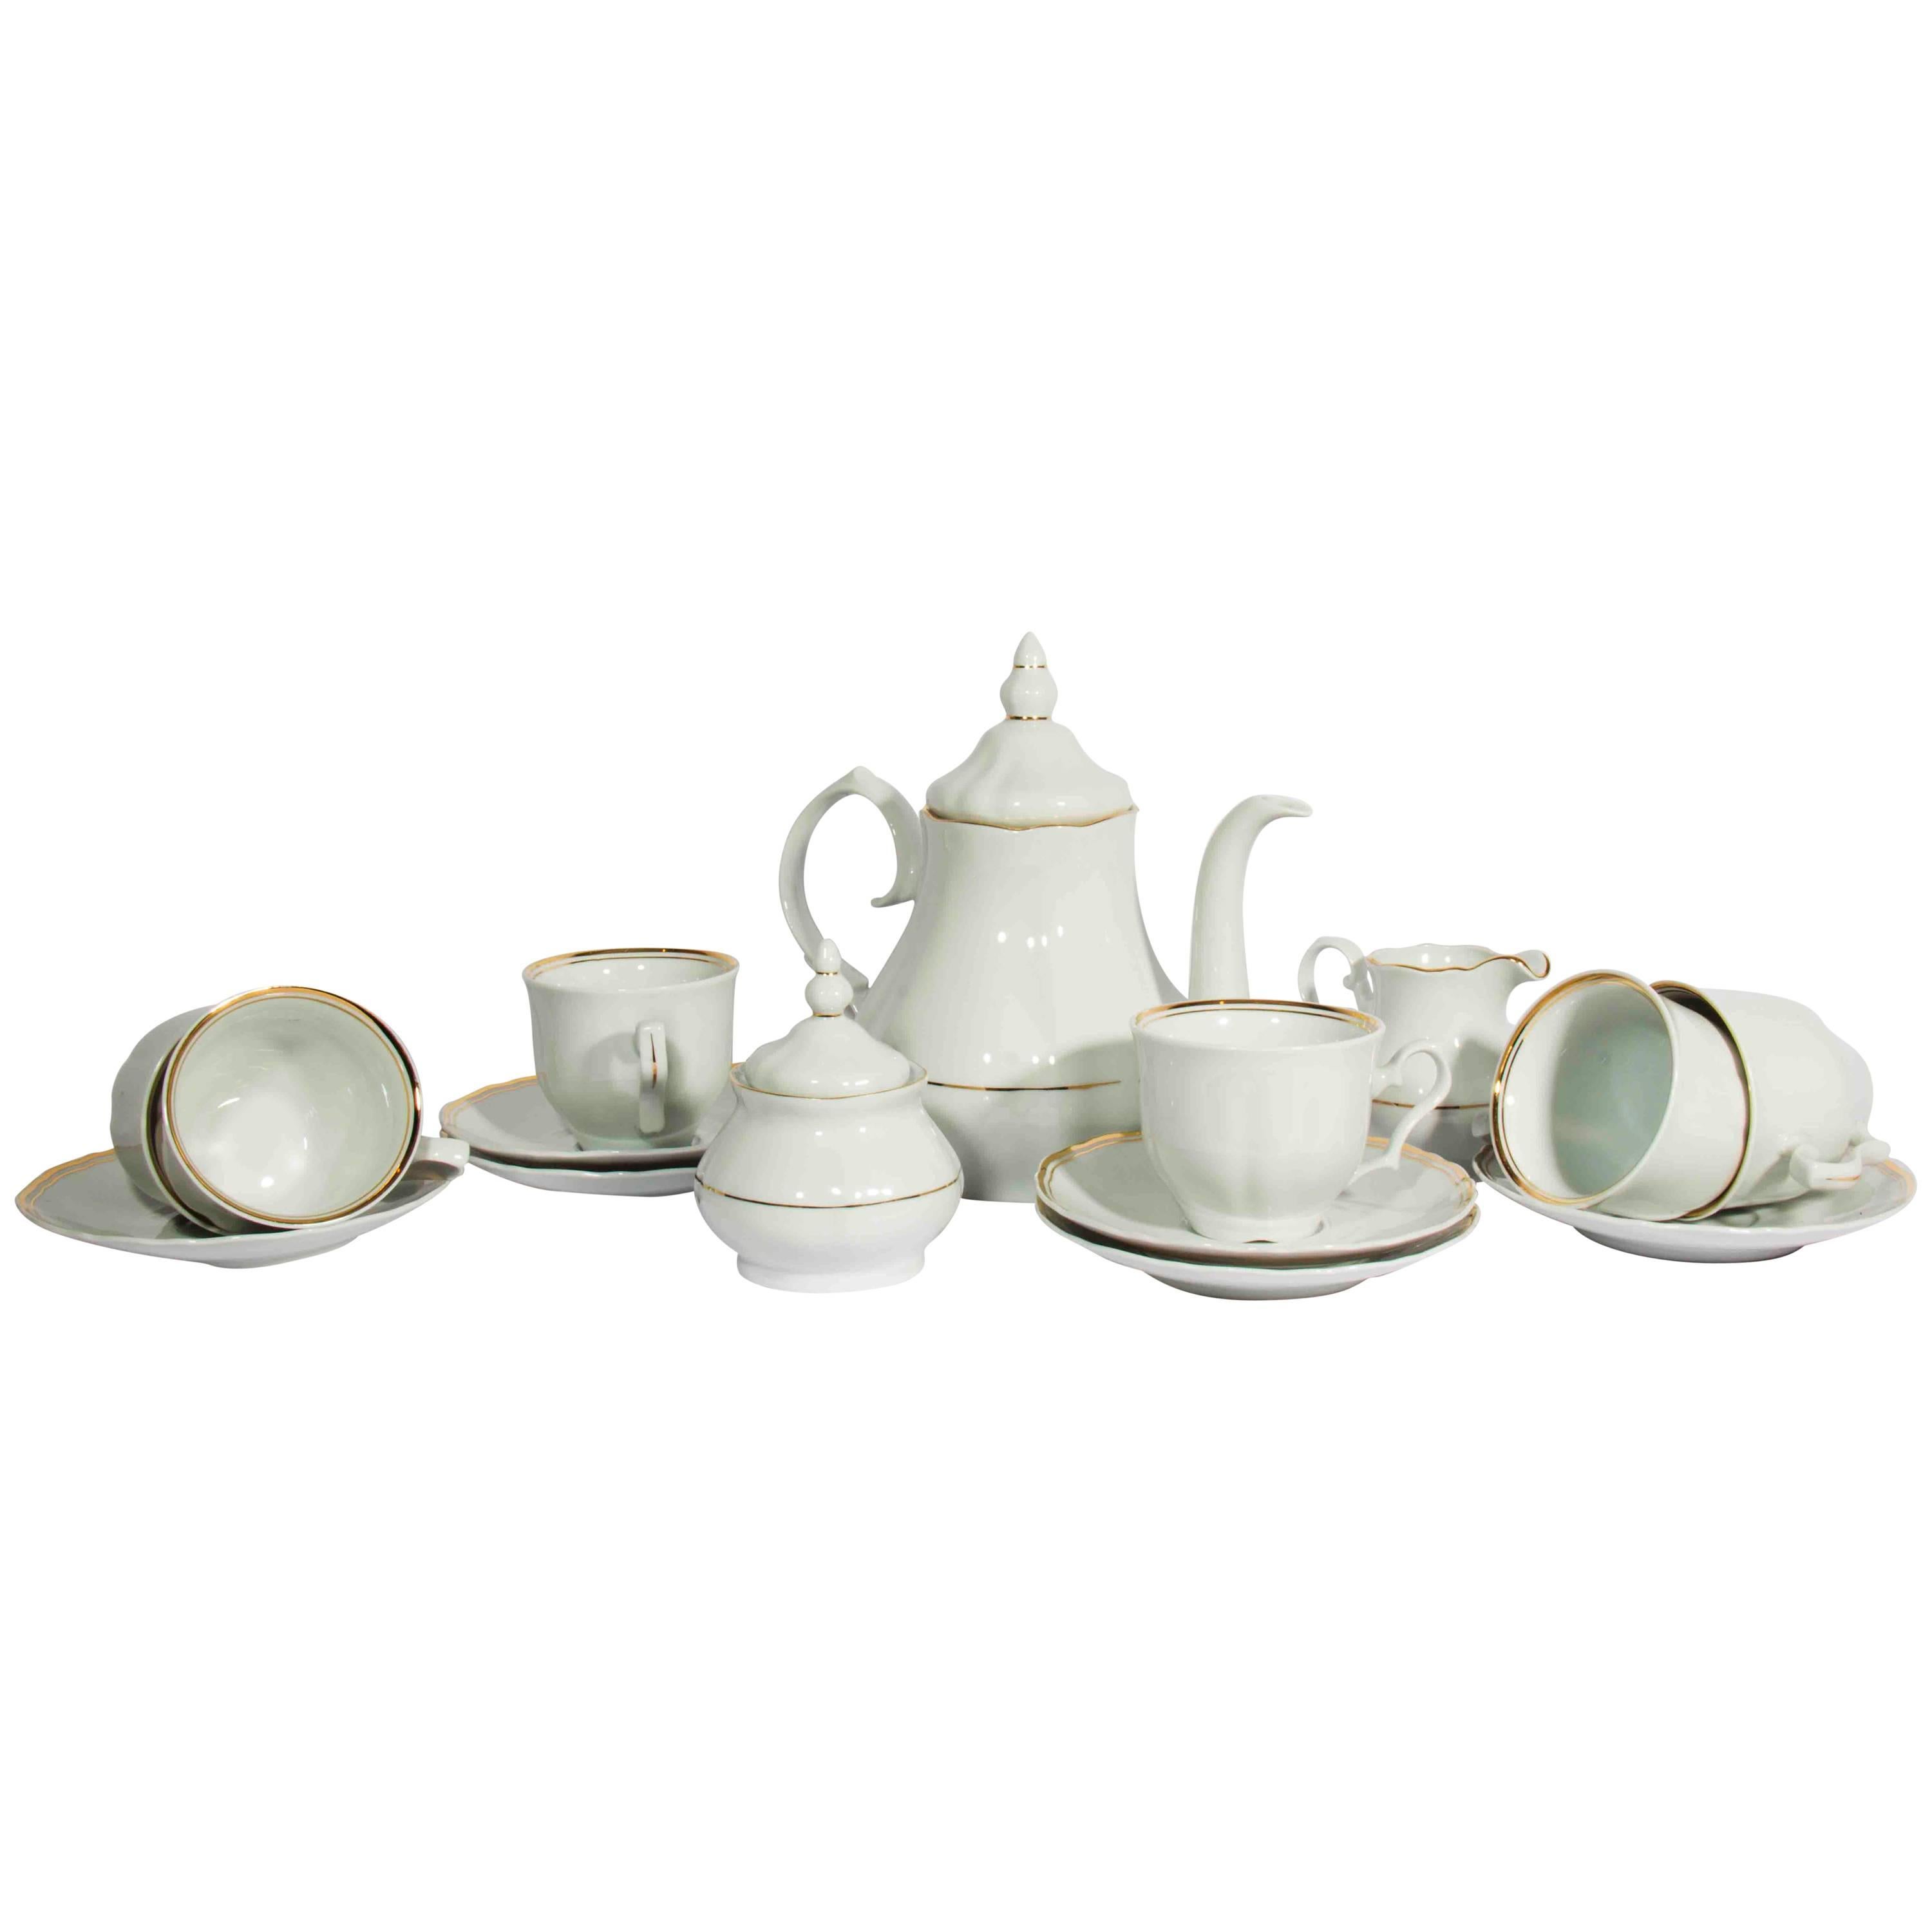 Vintage Porcelain Tea Service for Six People